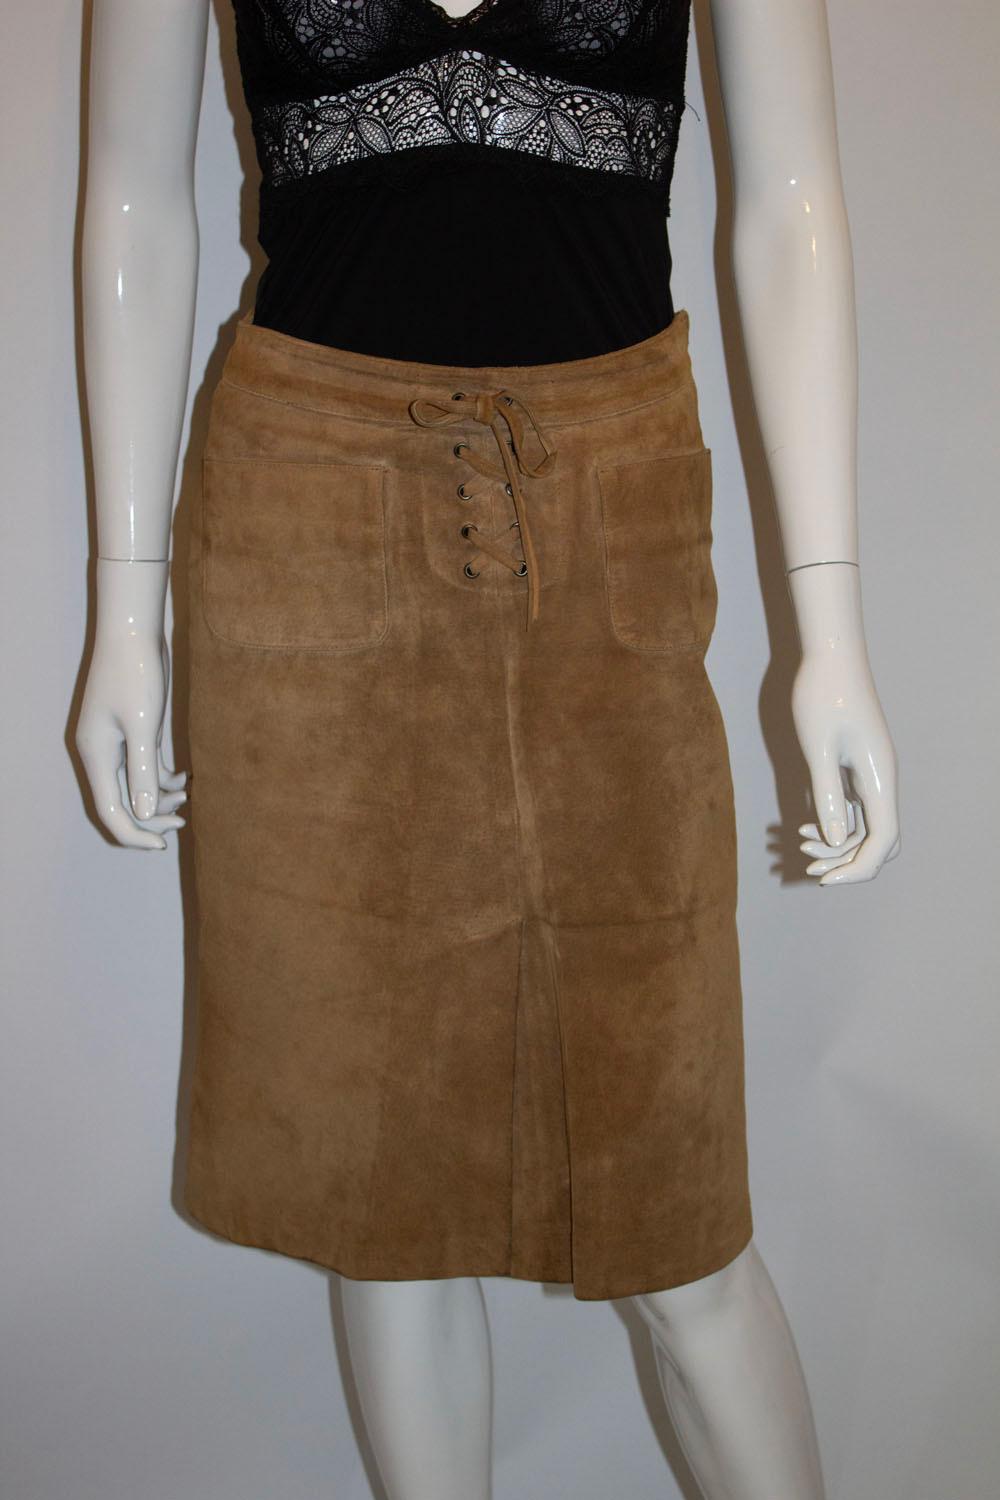 Women's Vintage Kookai 1970s Style Suede Skirt For Sale